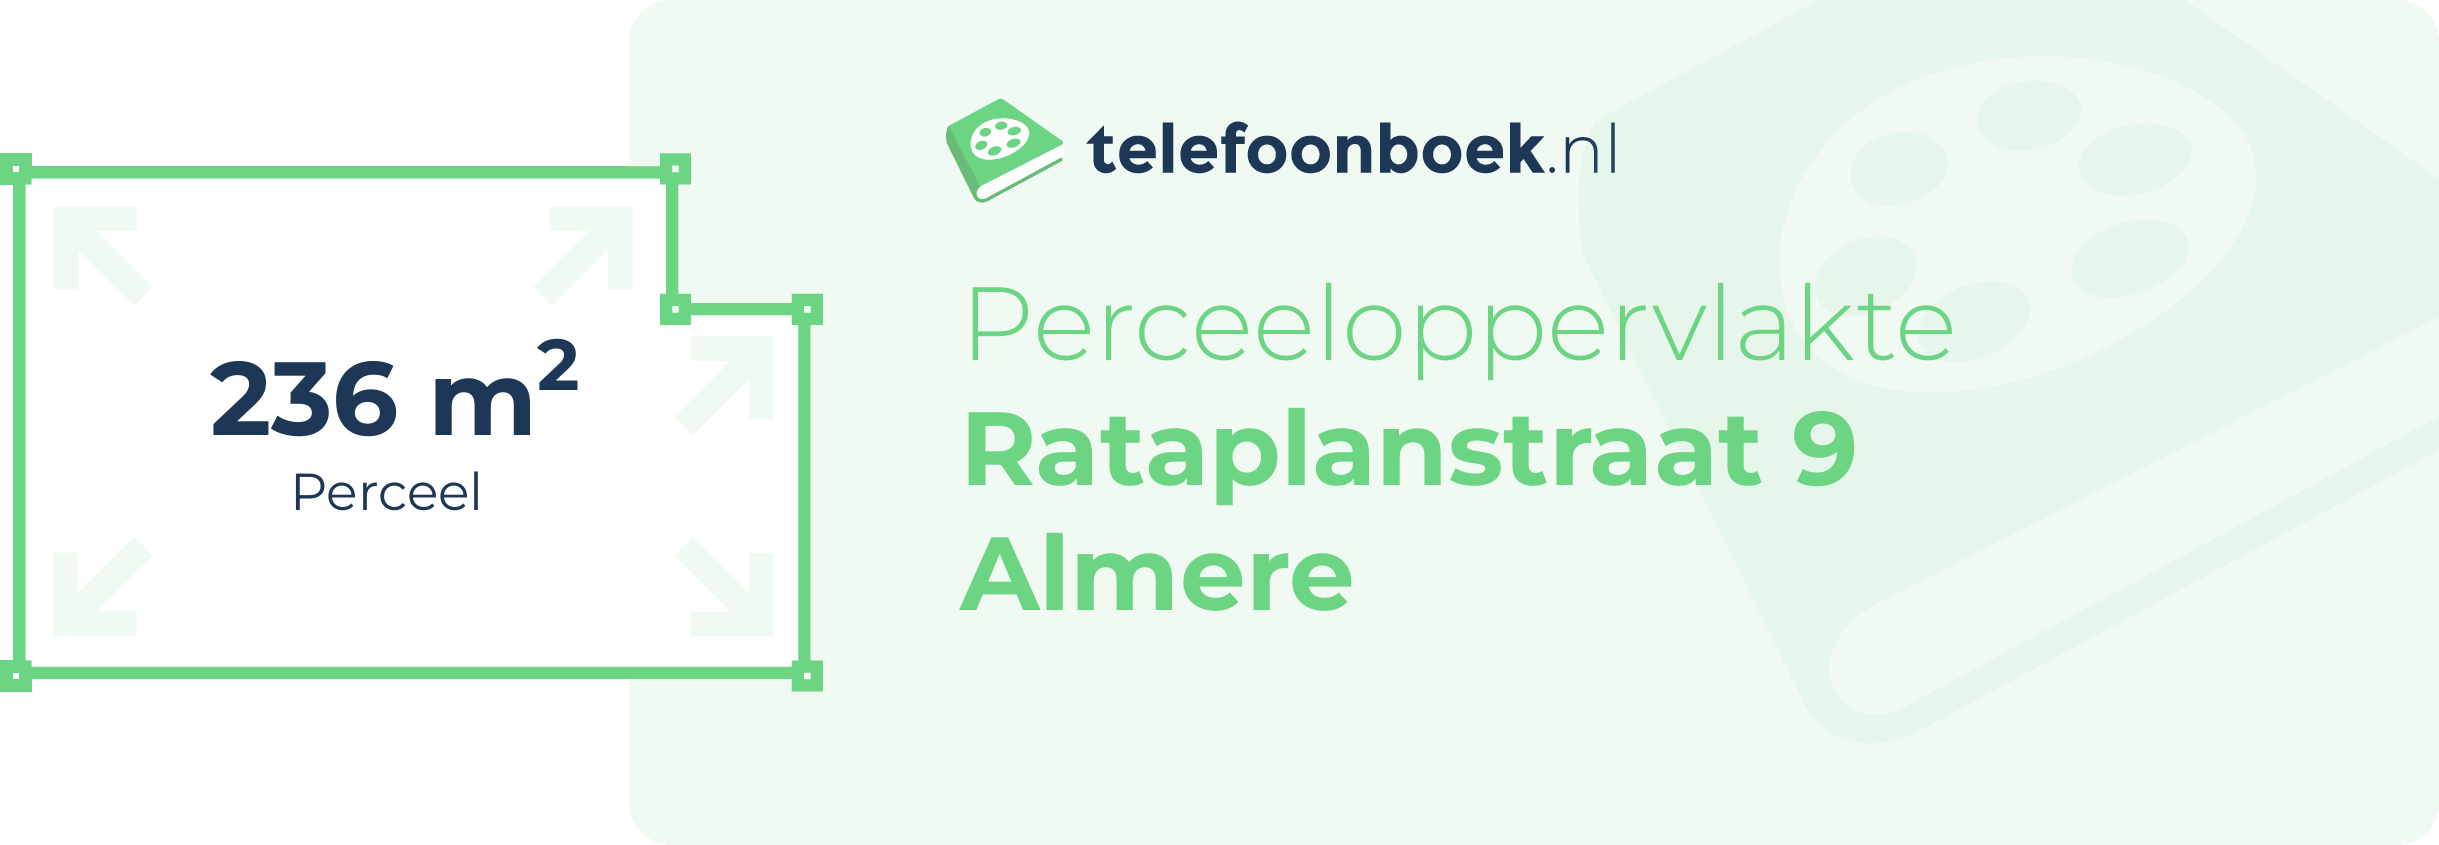 Perceeloppervlakte Rataplanstraat 9 Almere